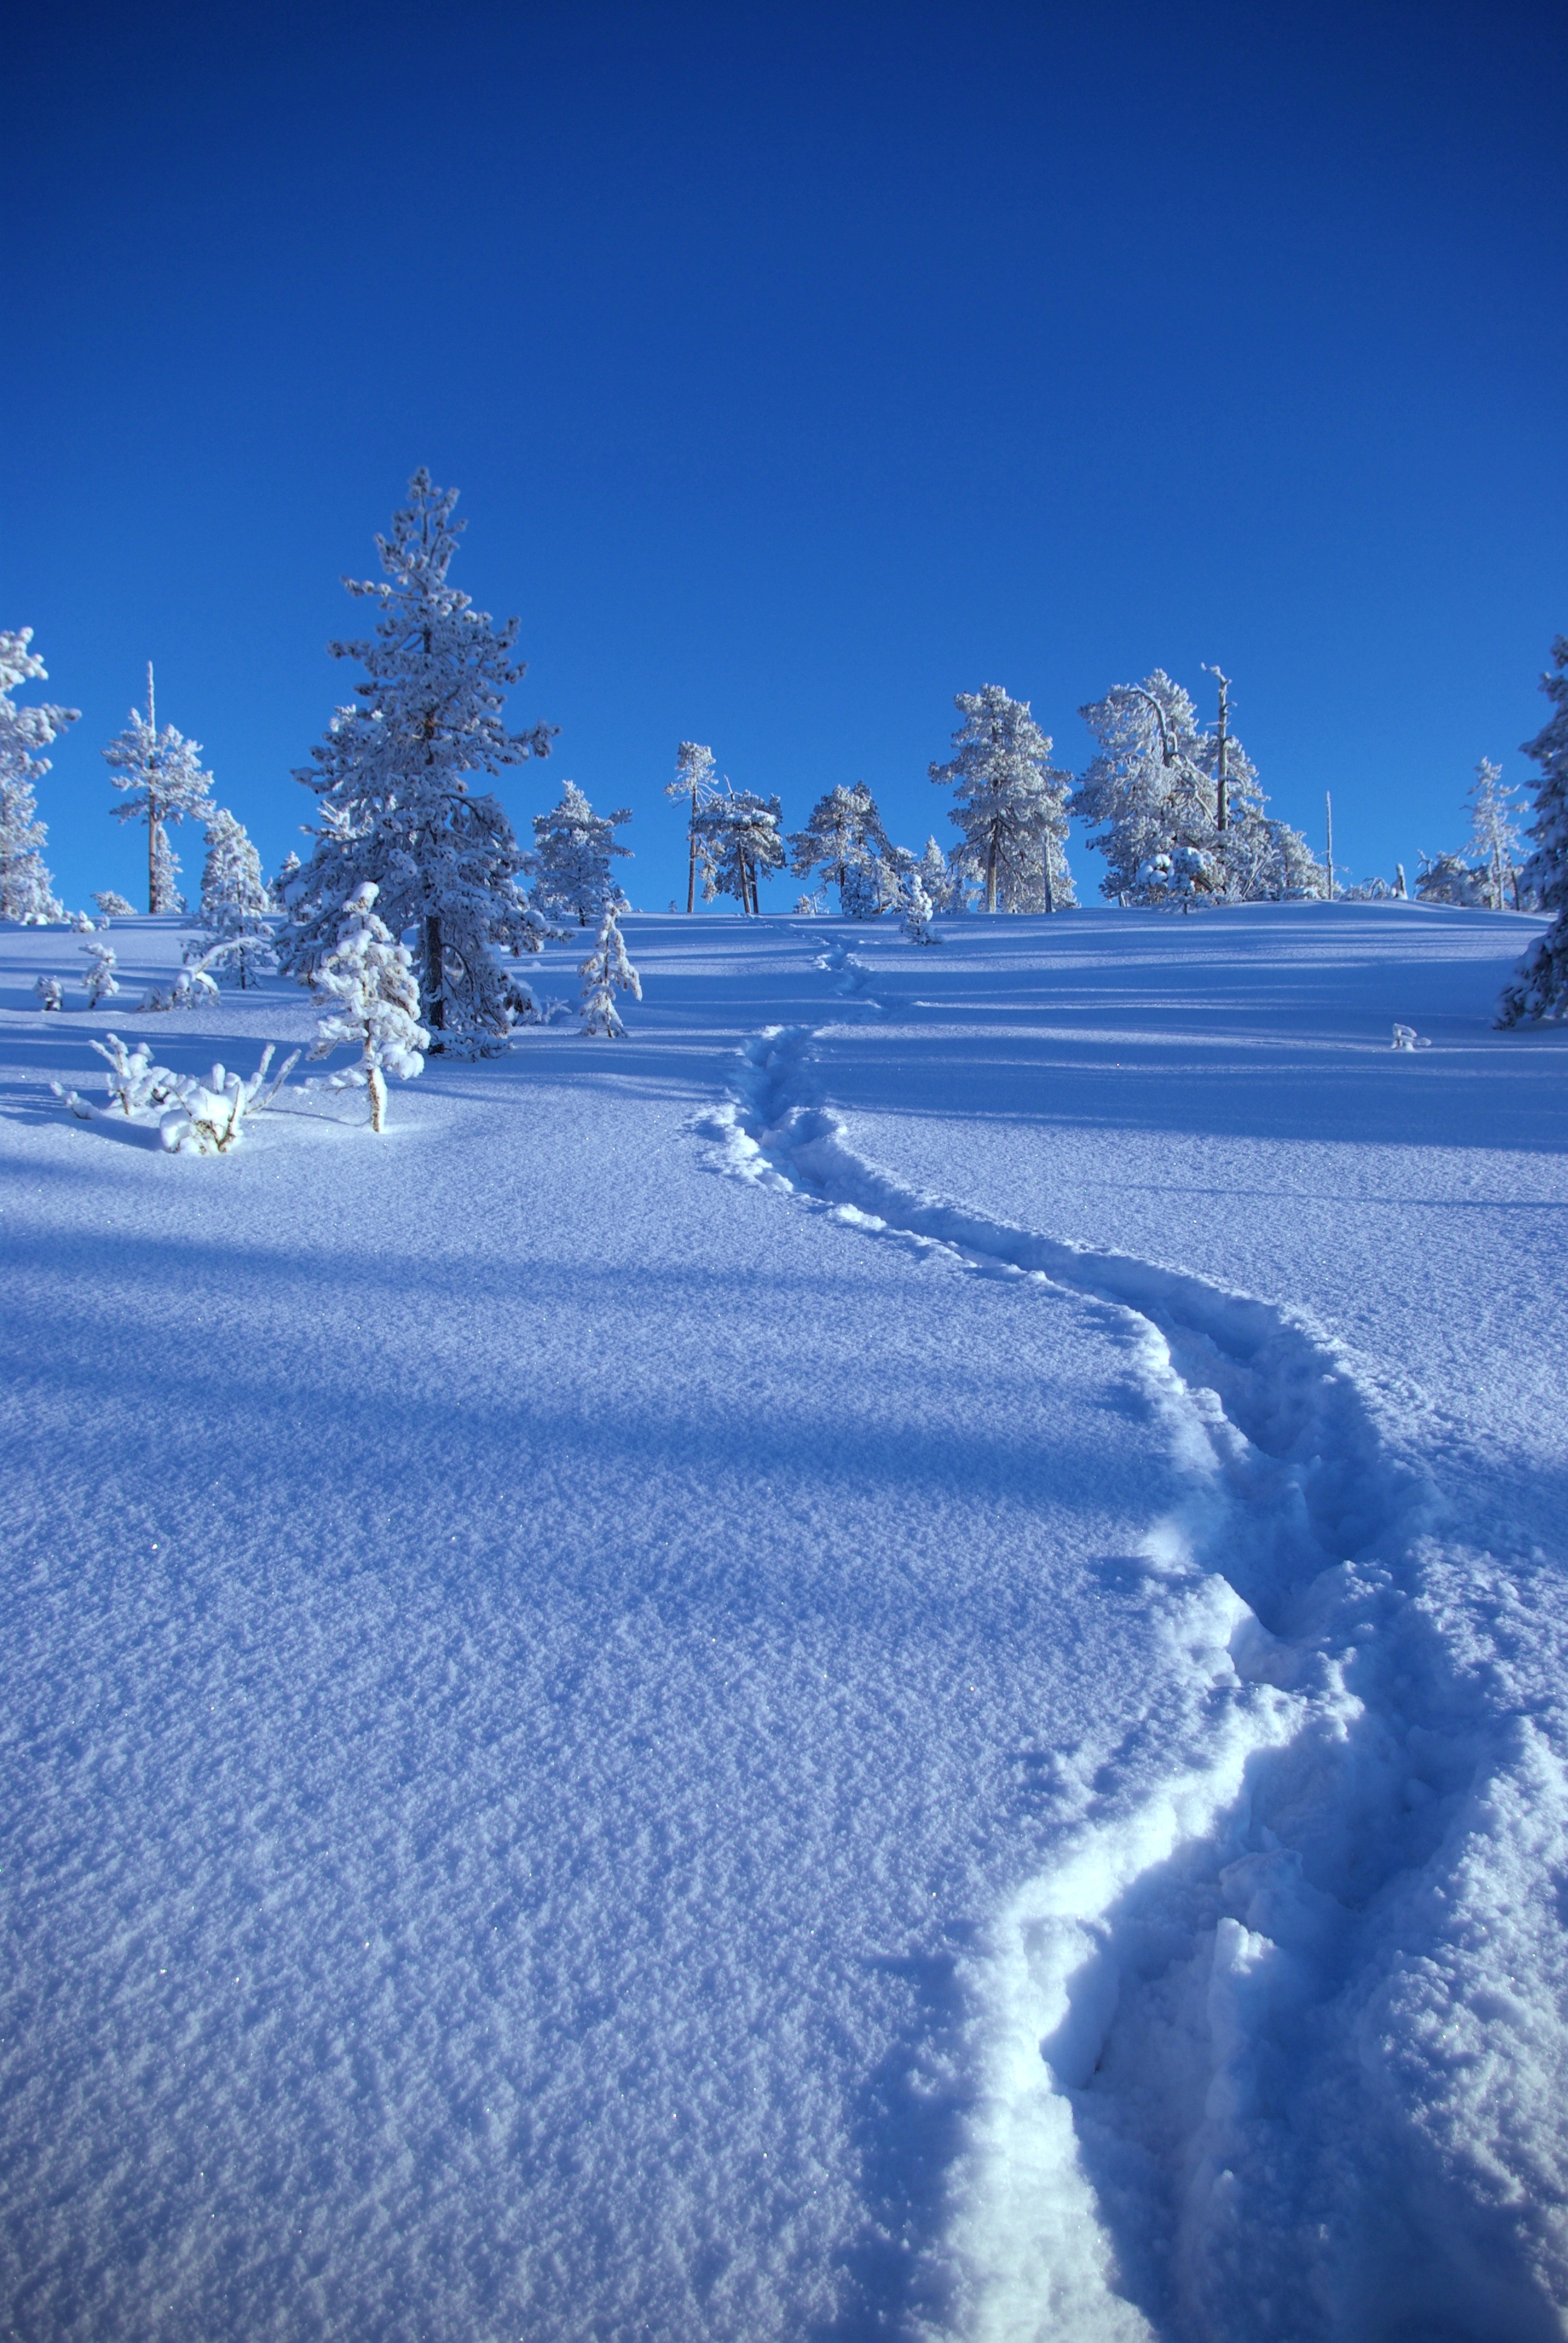 File:Upwards snow path.jpg - Wikimedia Commons